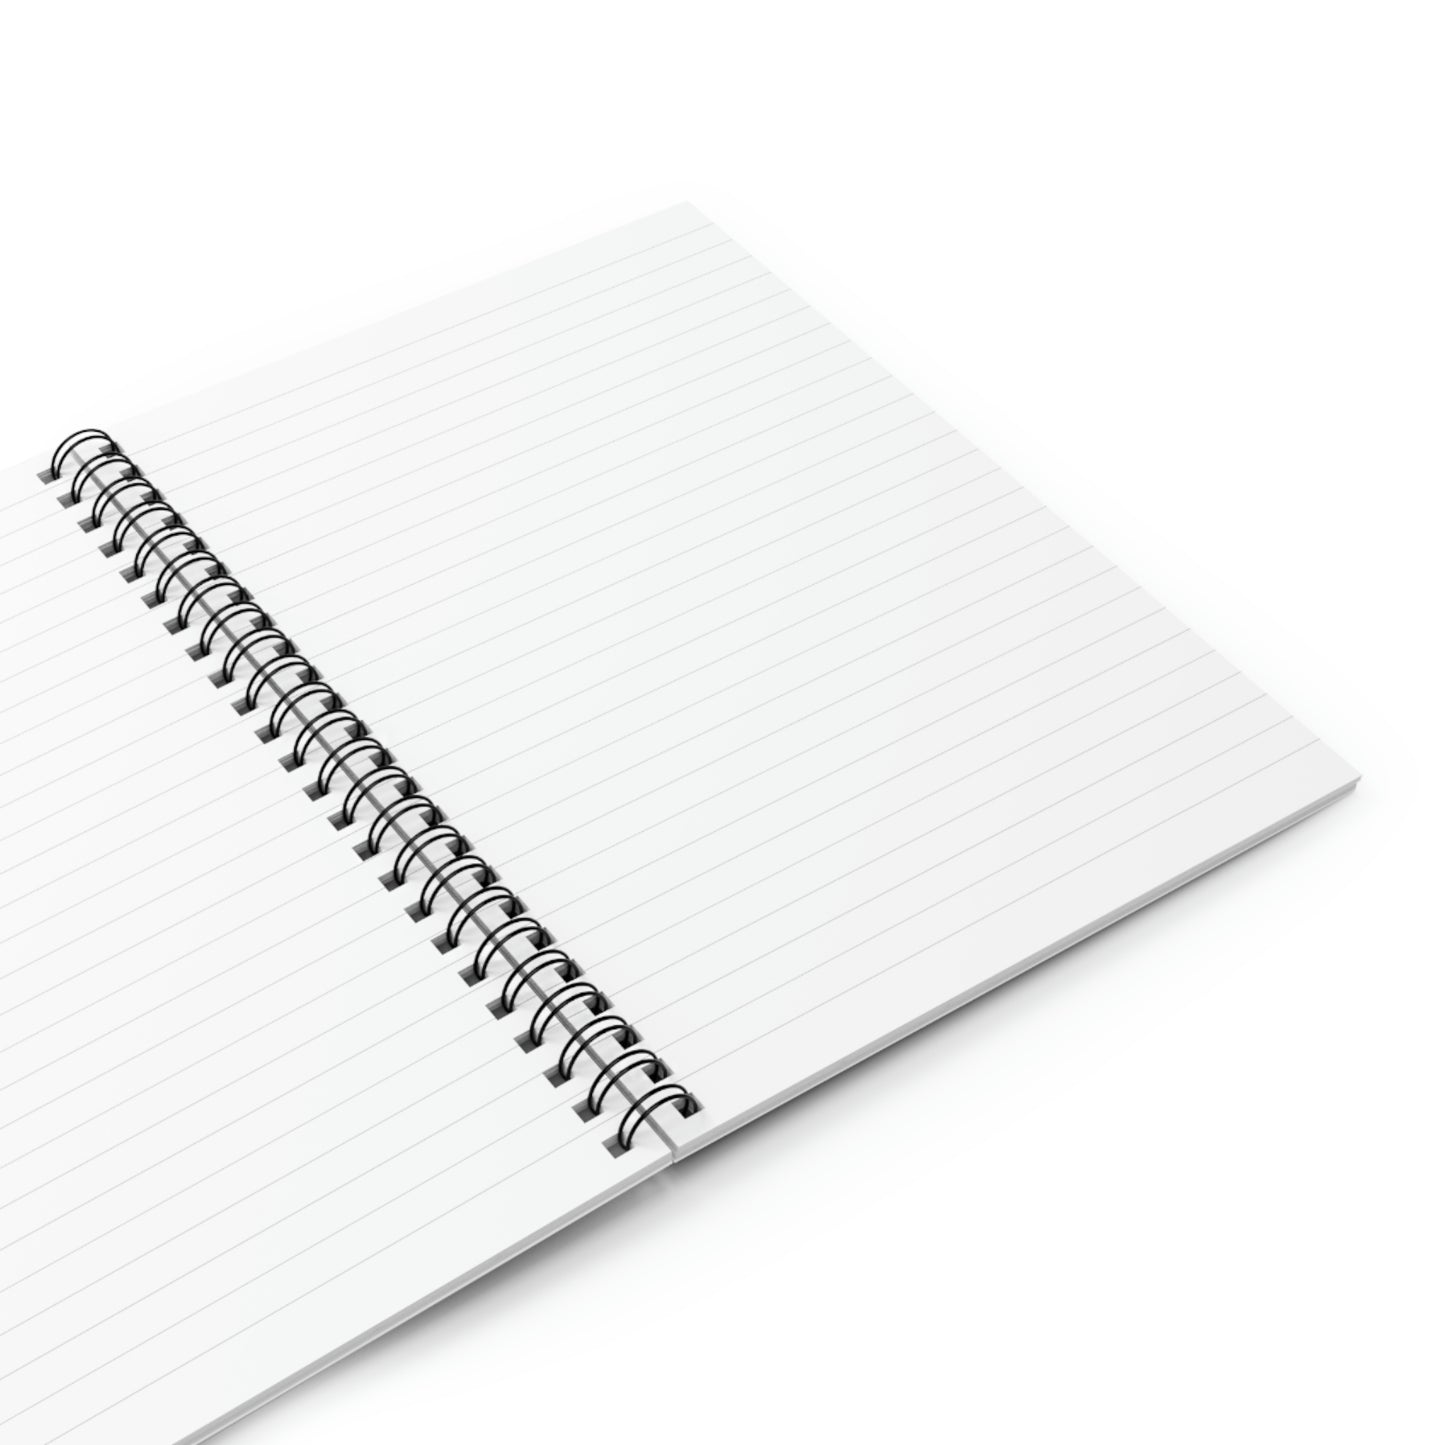 Covered 1 Spiral Notebook/Journal